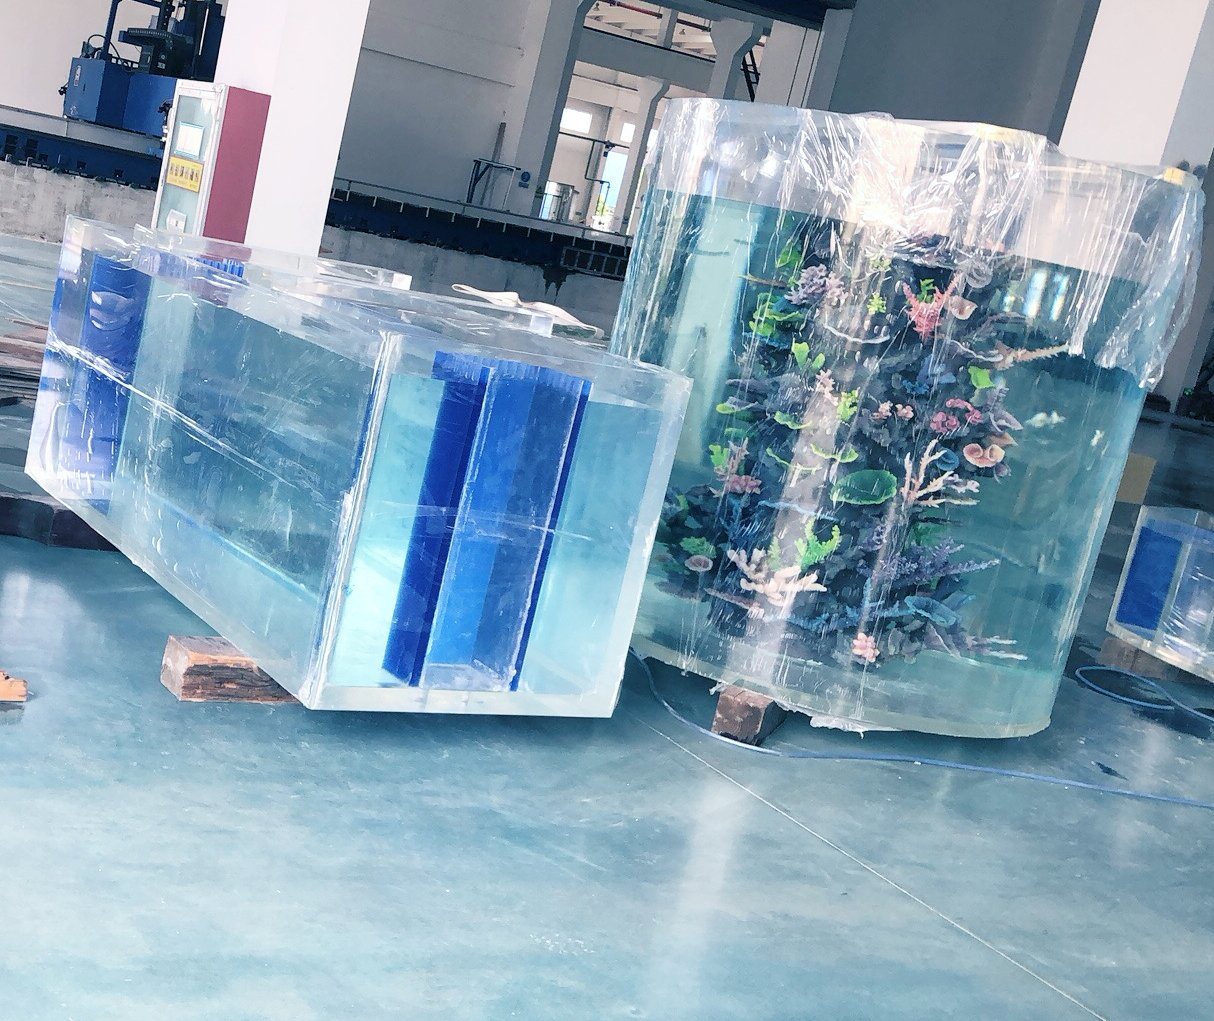 Using Acrylic To Build Aquariums & Fish Tanks by the Leyu factory - Leyu